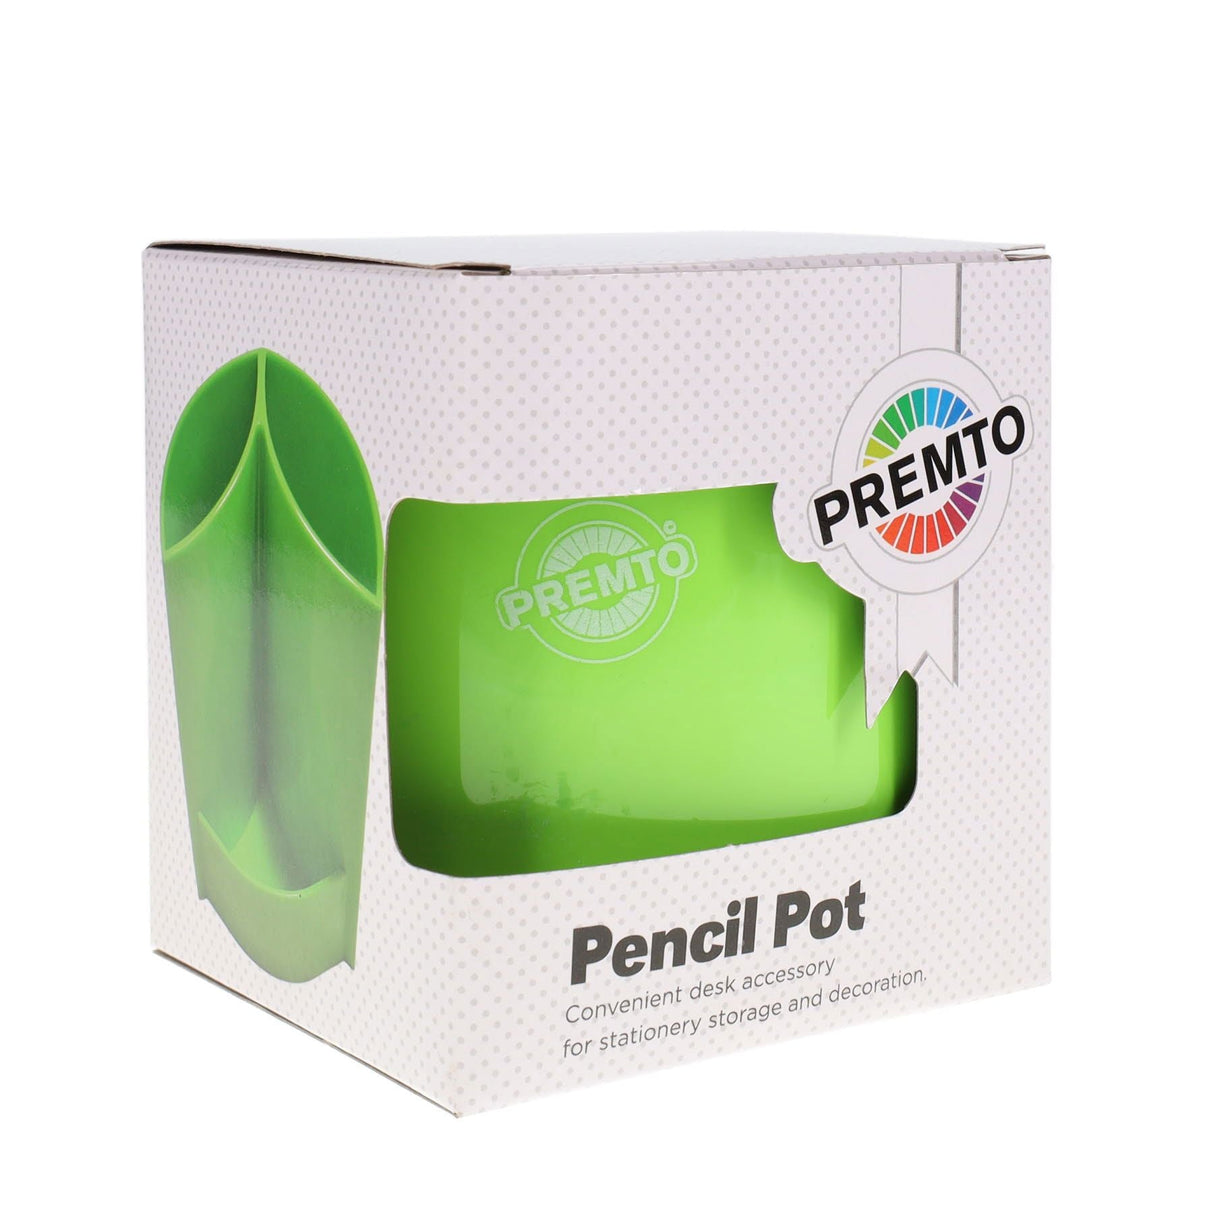 Premto Pen Pot - Caterpillar Green | Stationery Shop UK